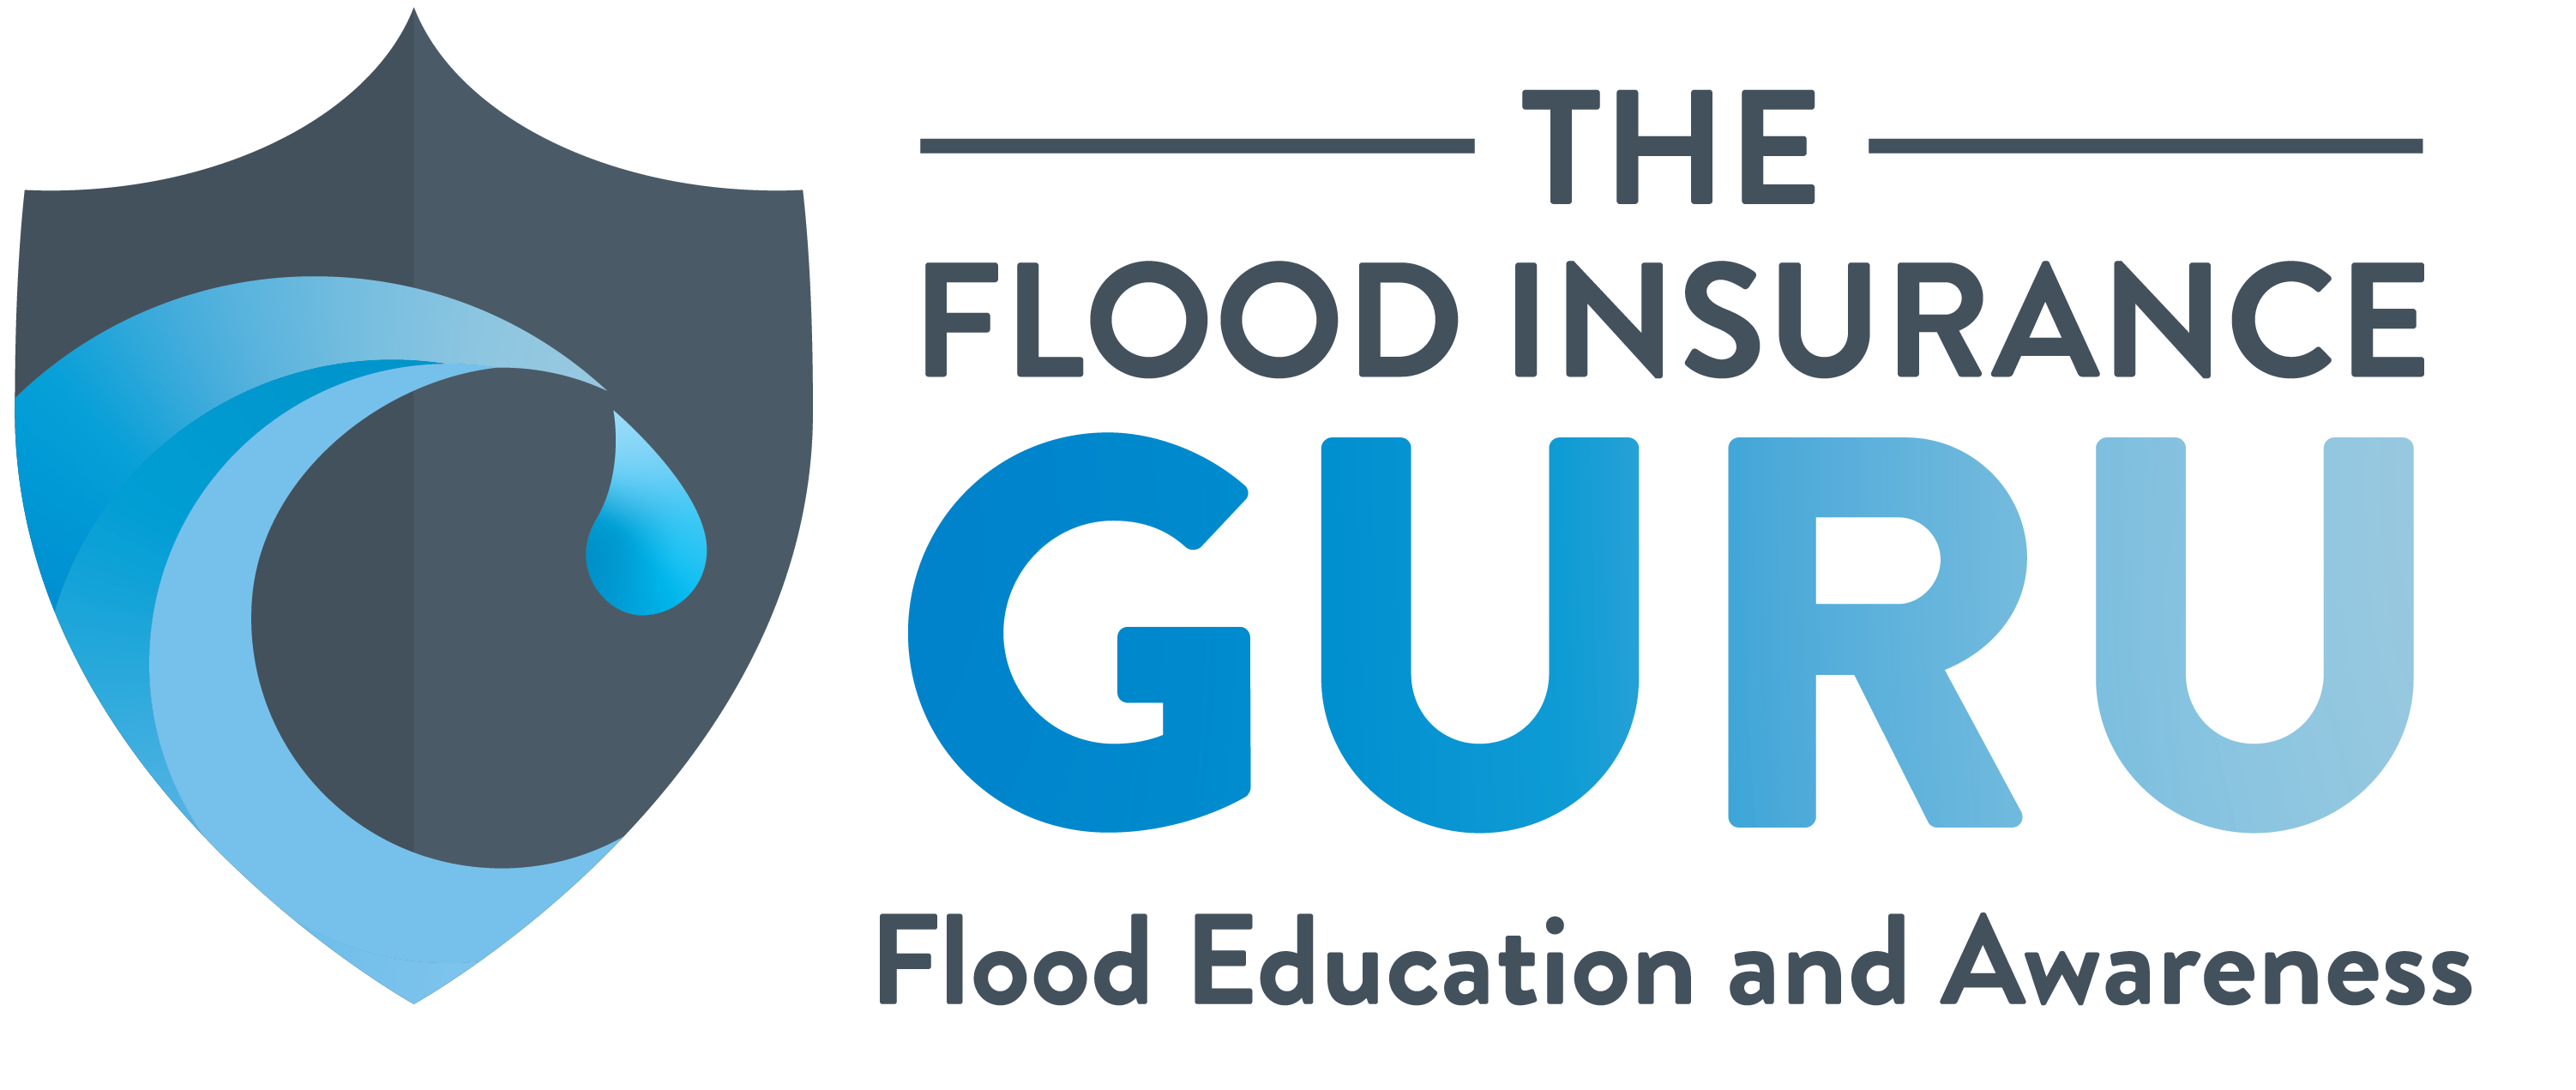 Flood Insurance Guru Logo w Tagline_H Full Color